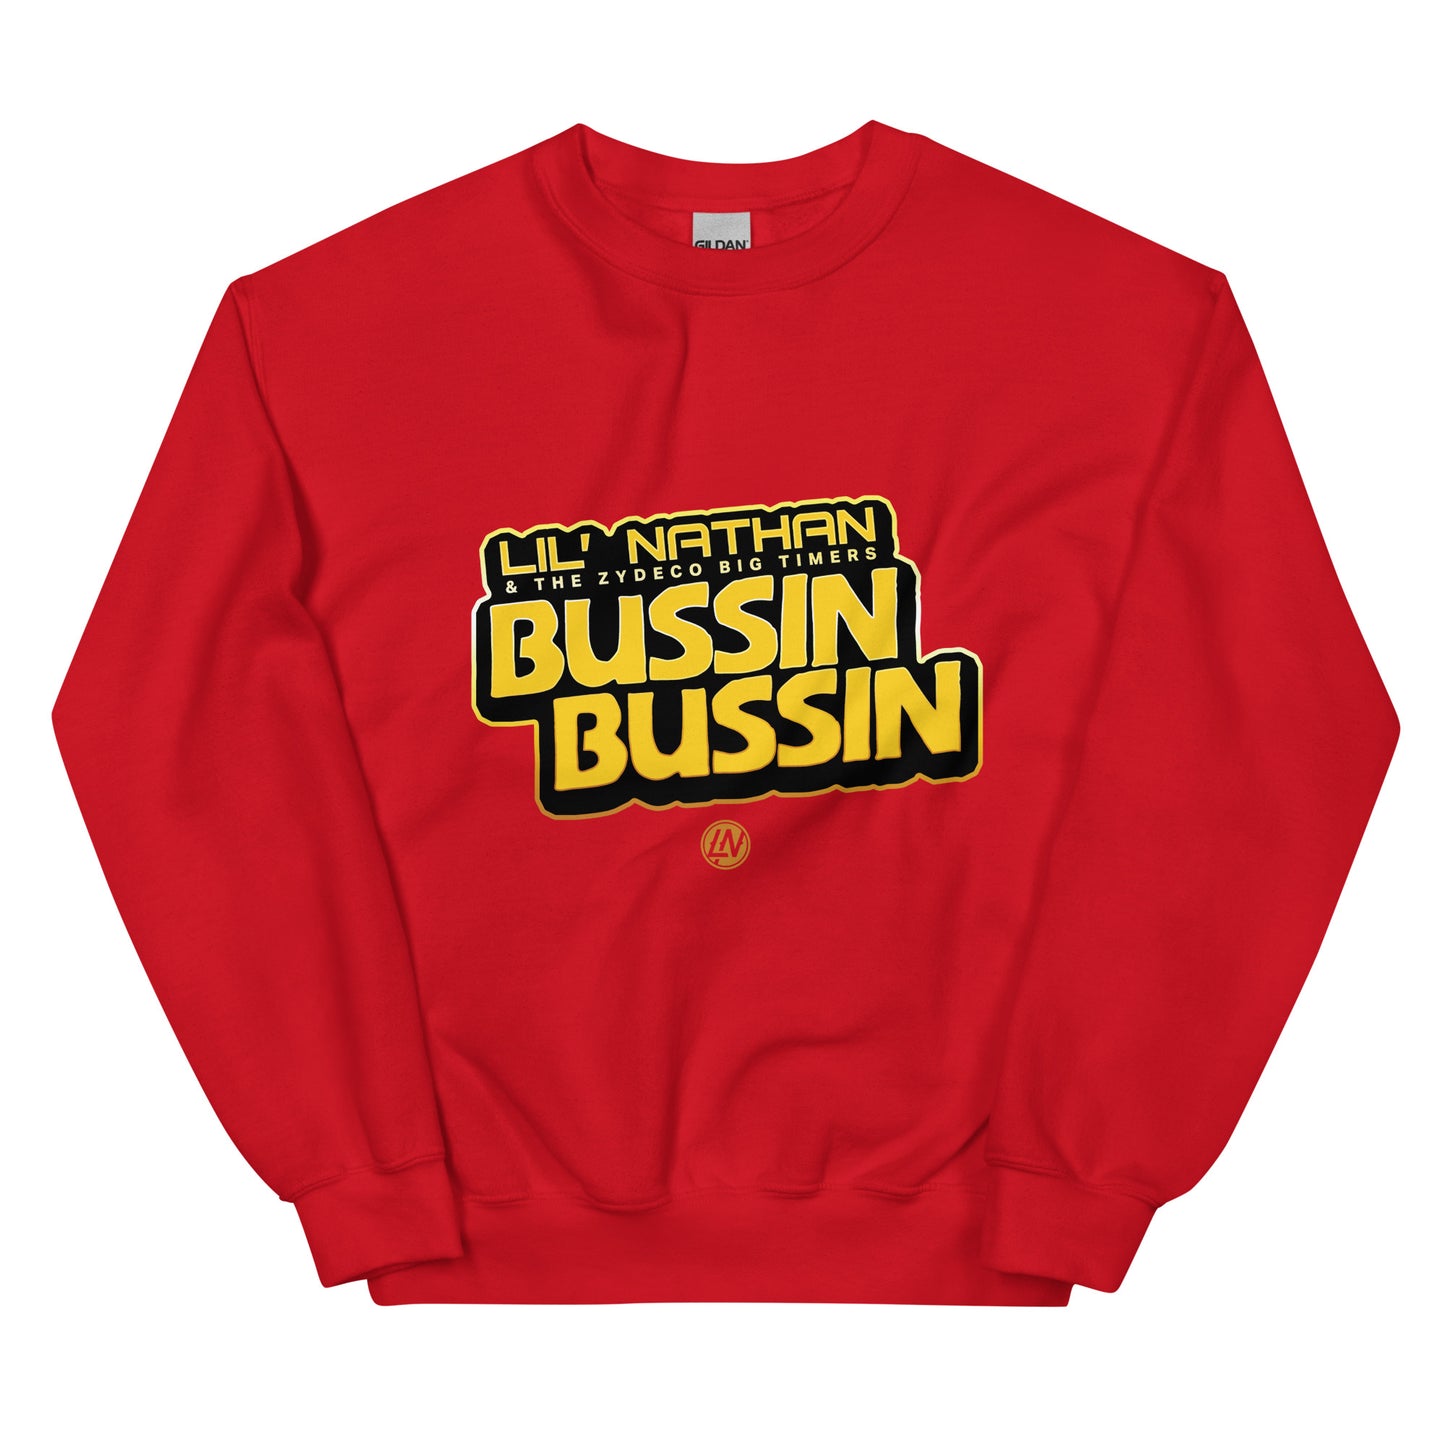 "Bussin Bussin" Unisex Sweatshirt (Gold Print)